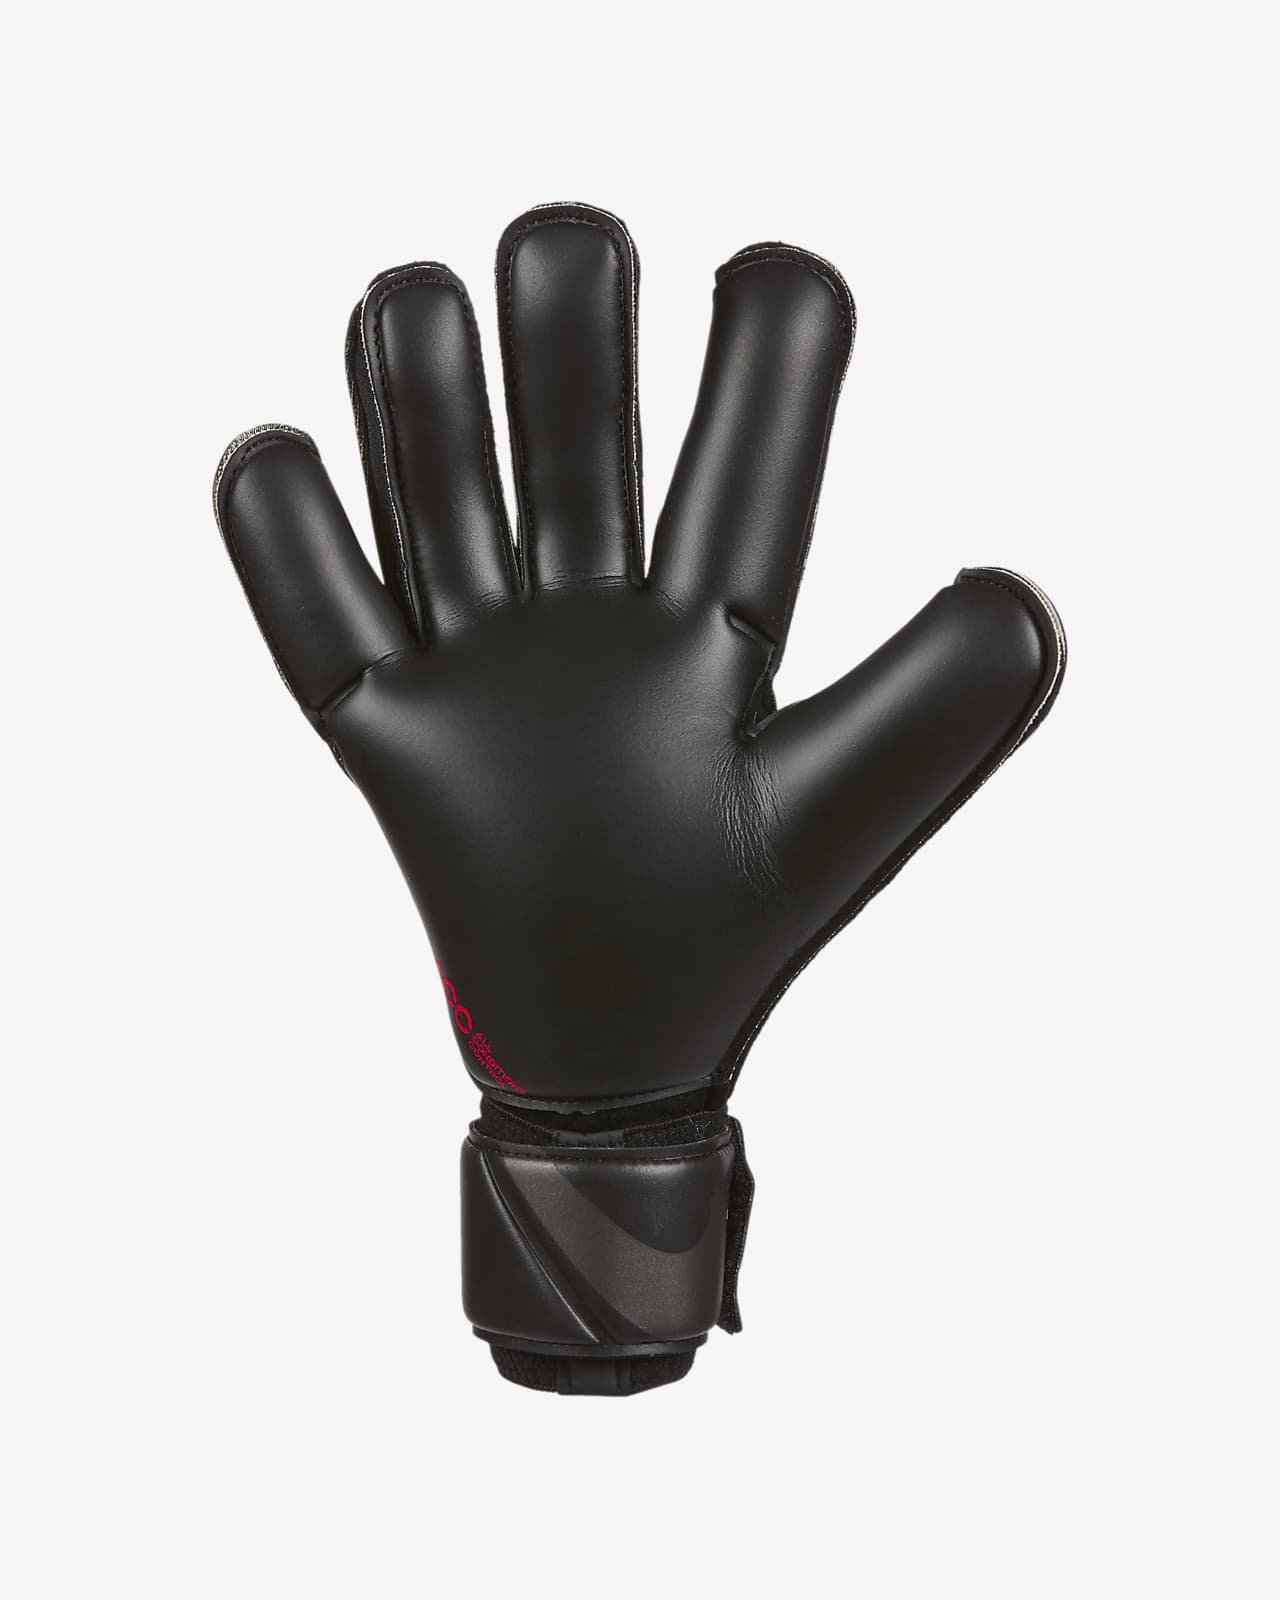 vapor 36 glove